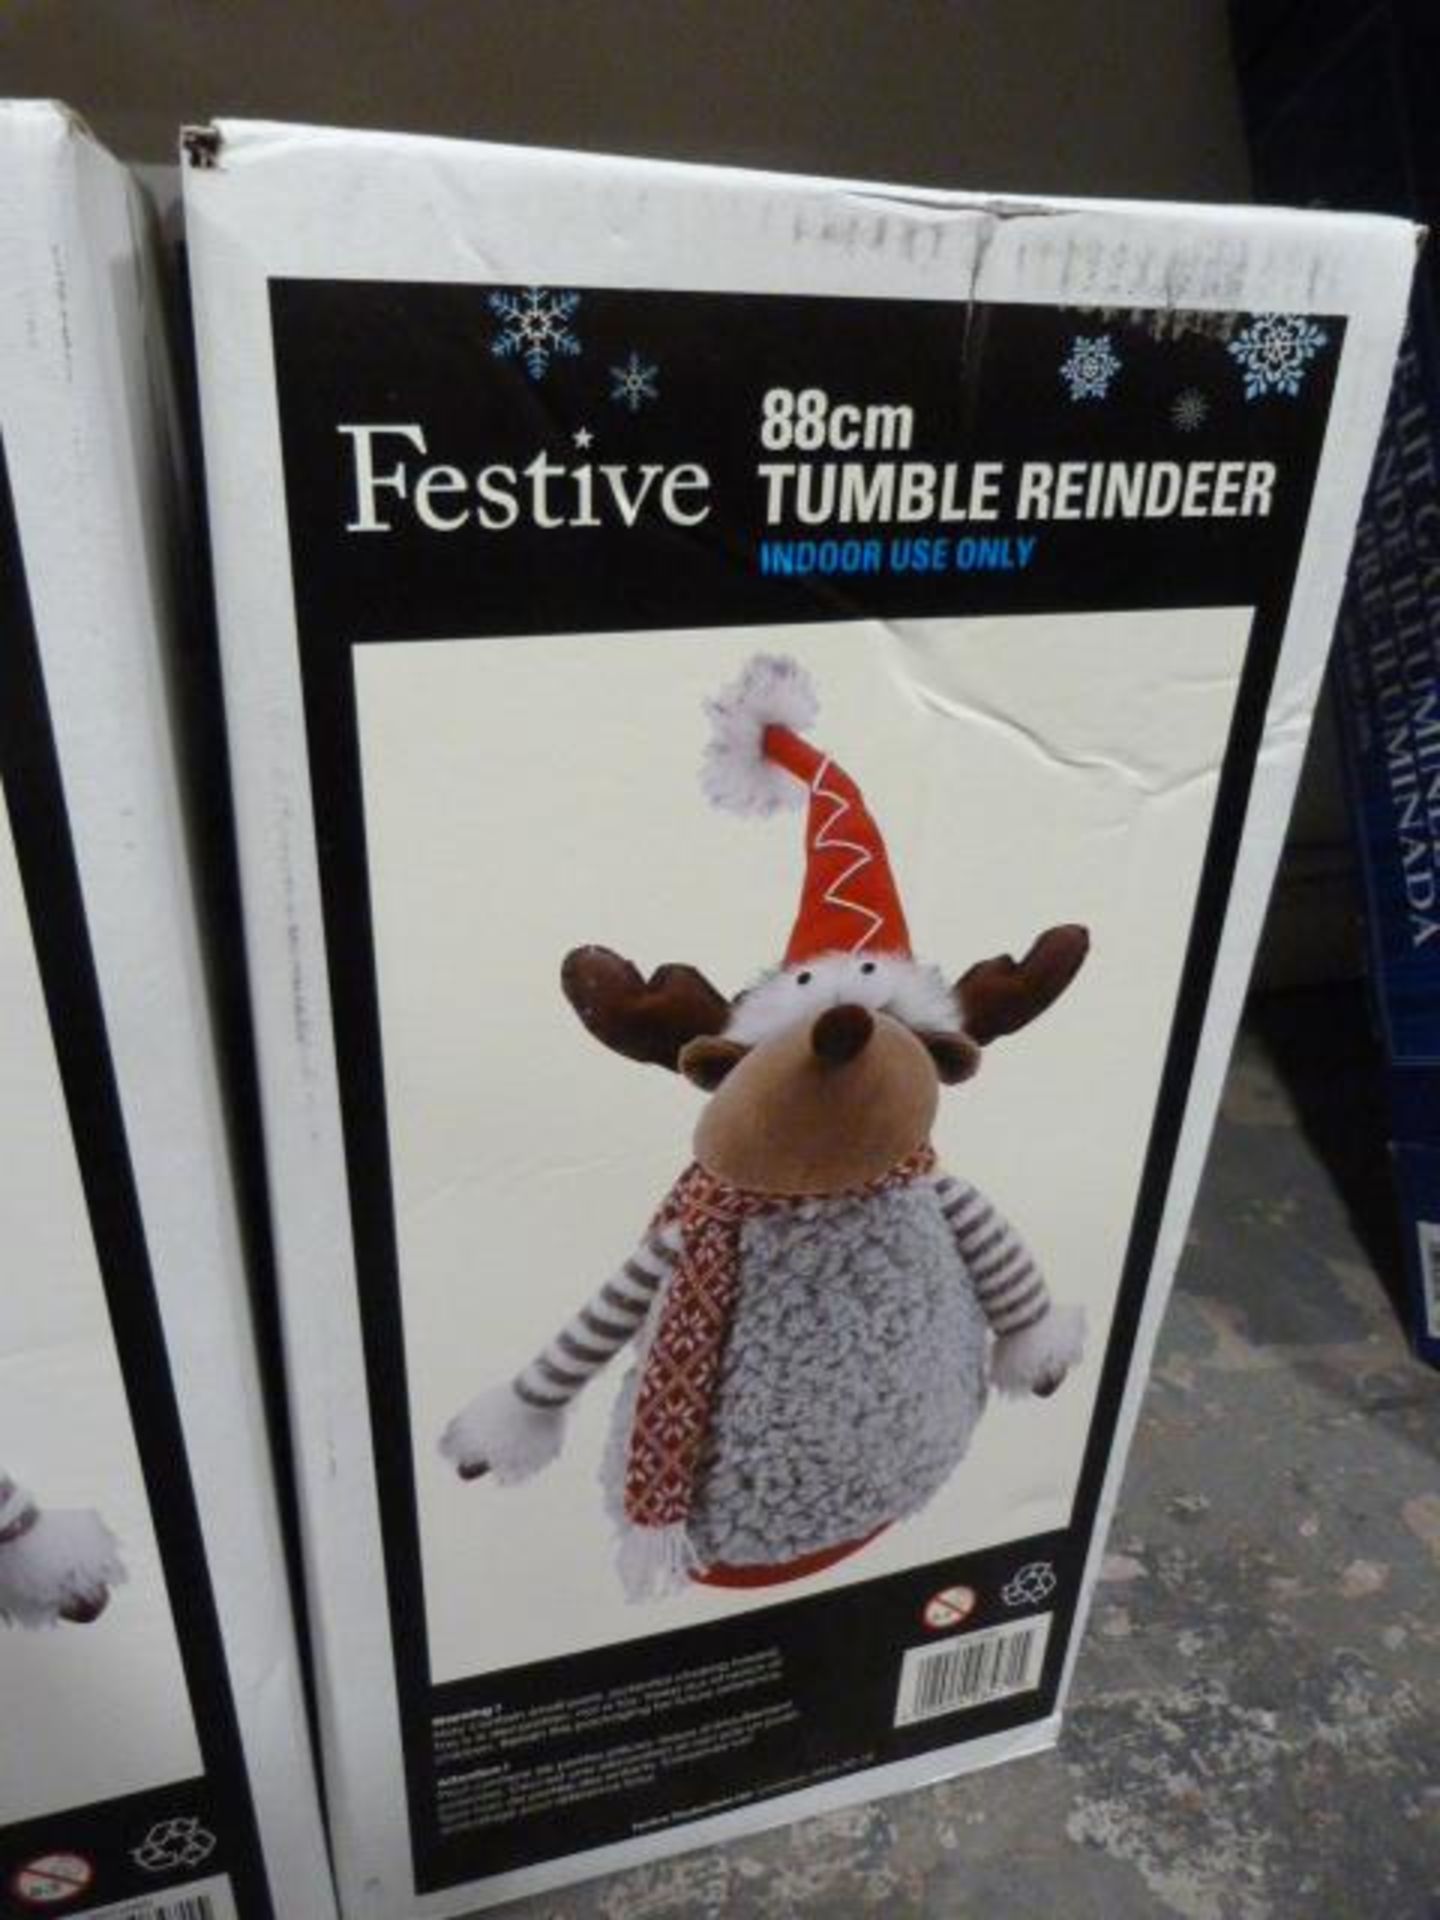 *Tumble Reindeer